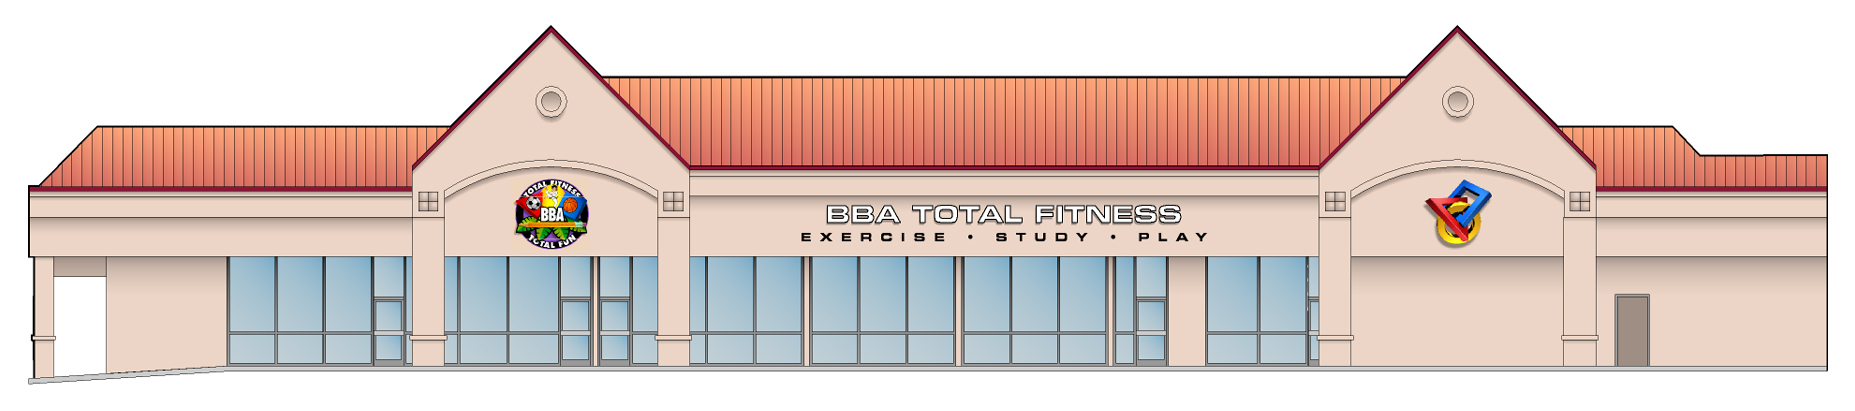 Black Belt Academy Total Fitness Center